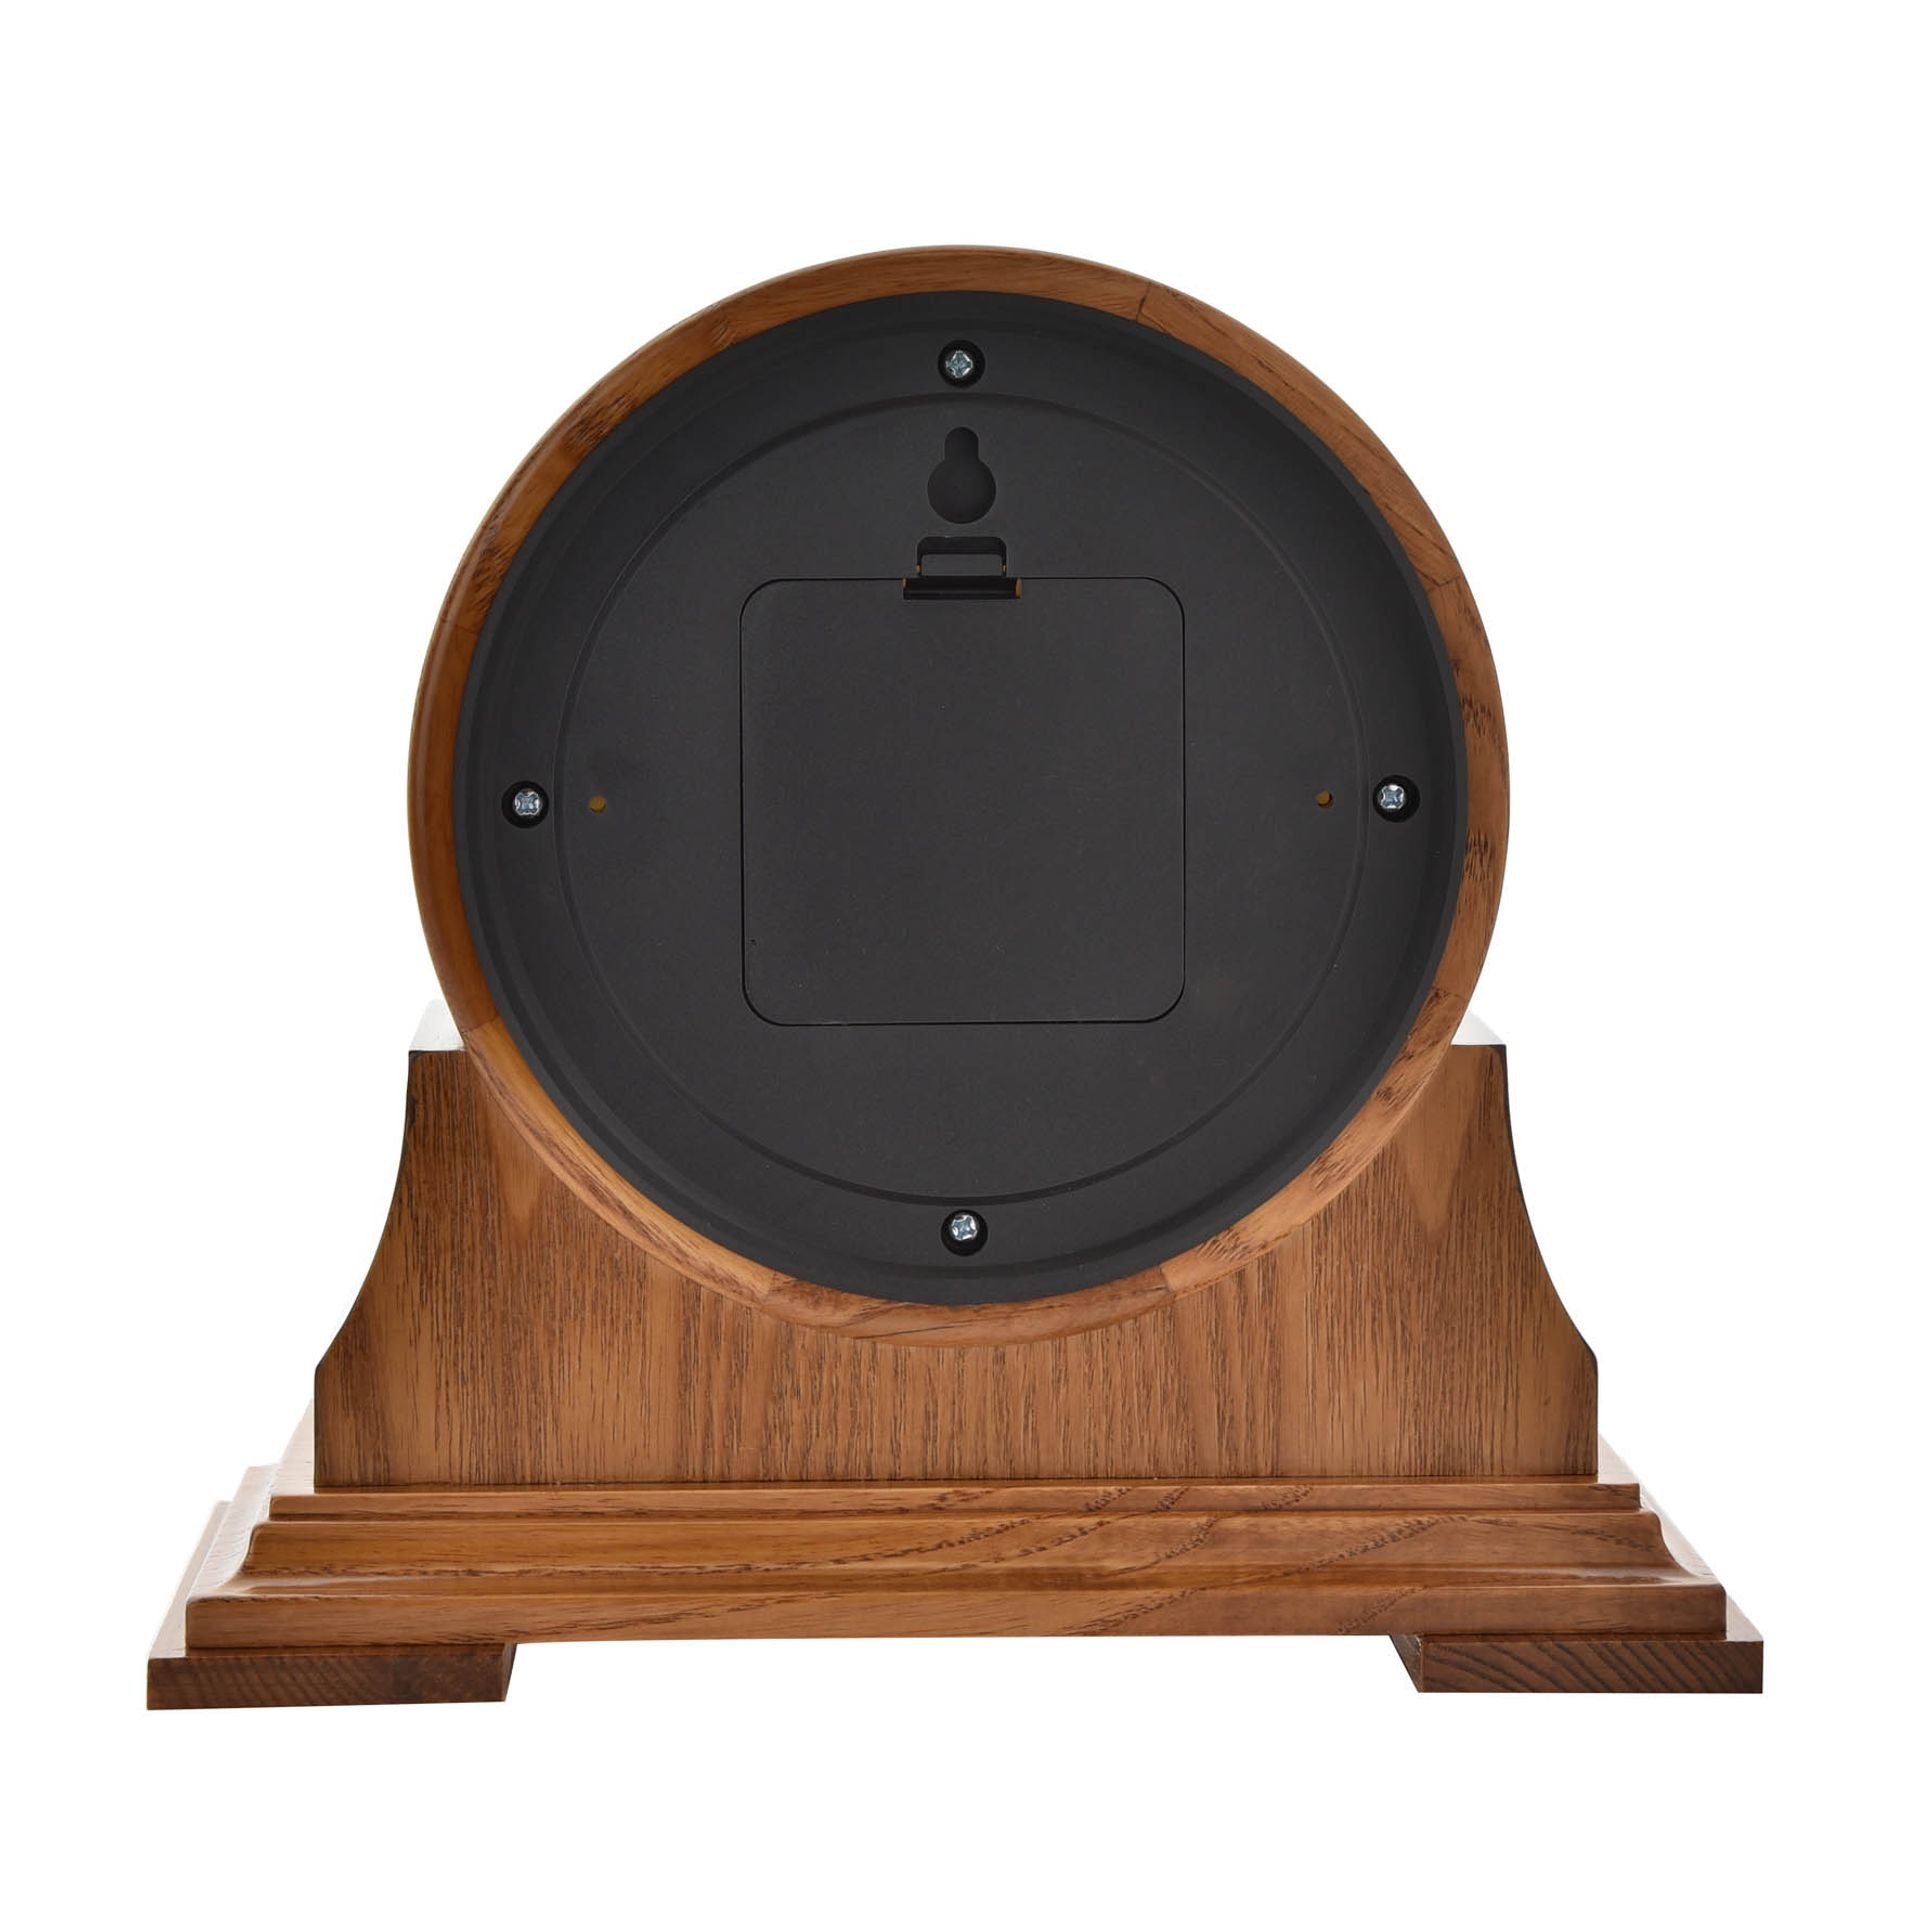 WM. Widdop Wooden Barrel Mantel Clock